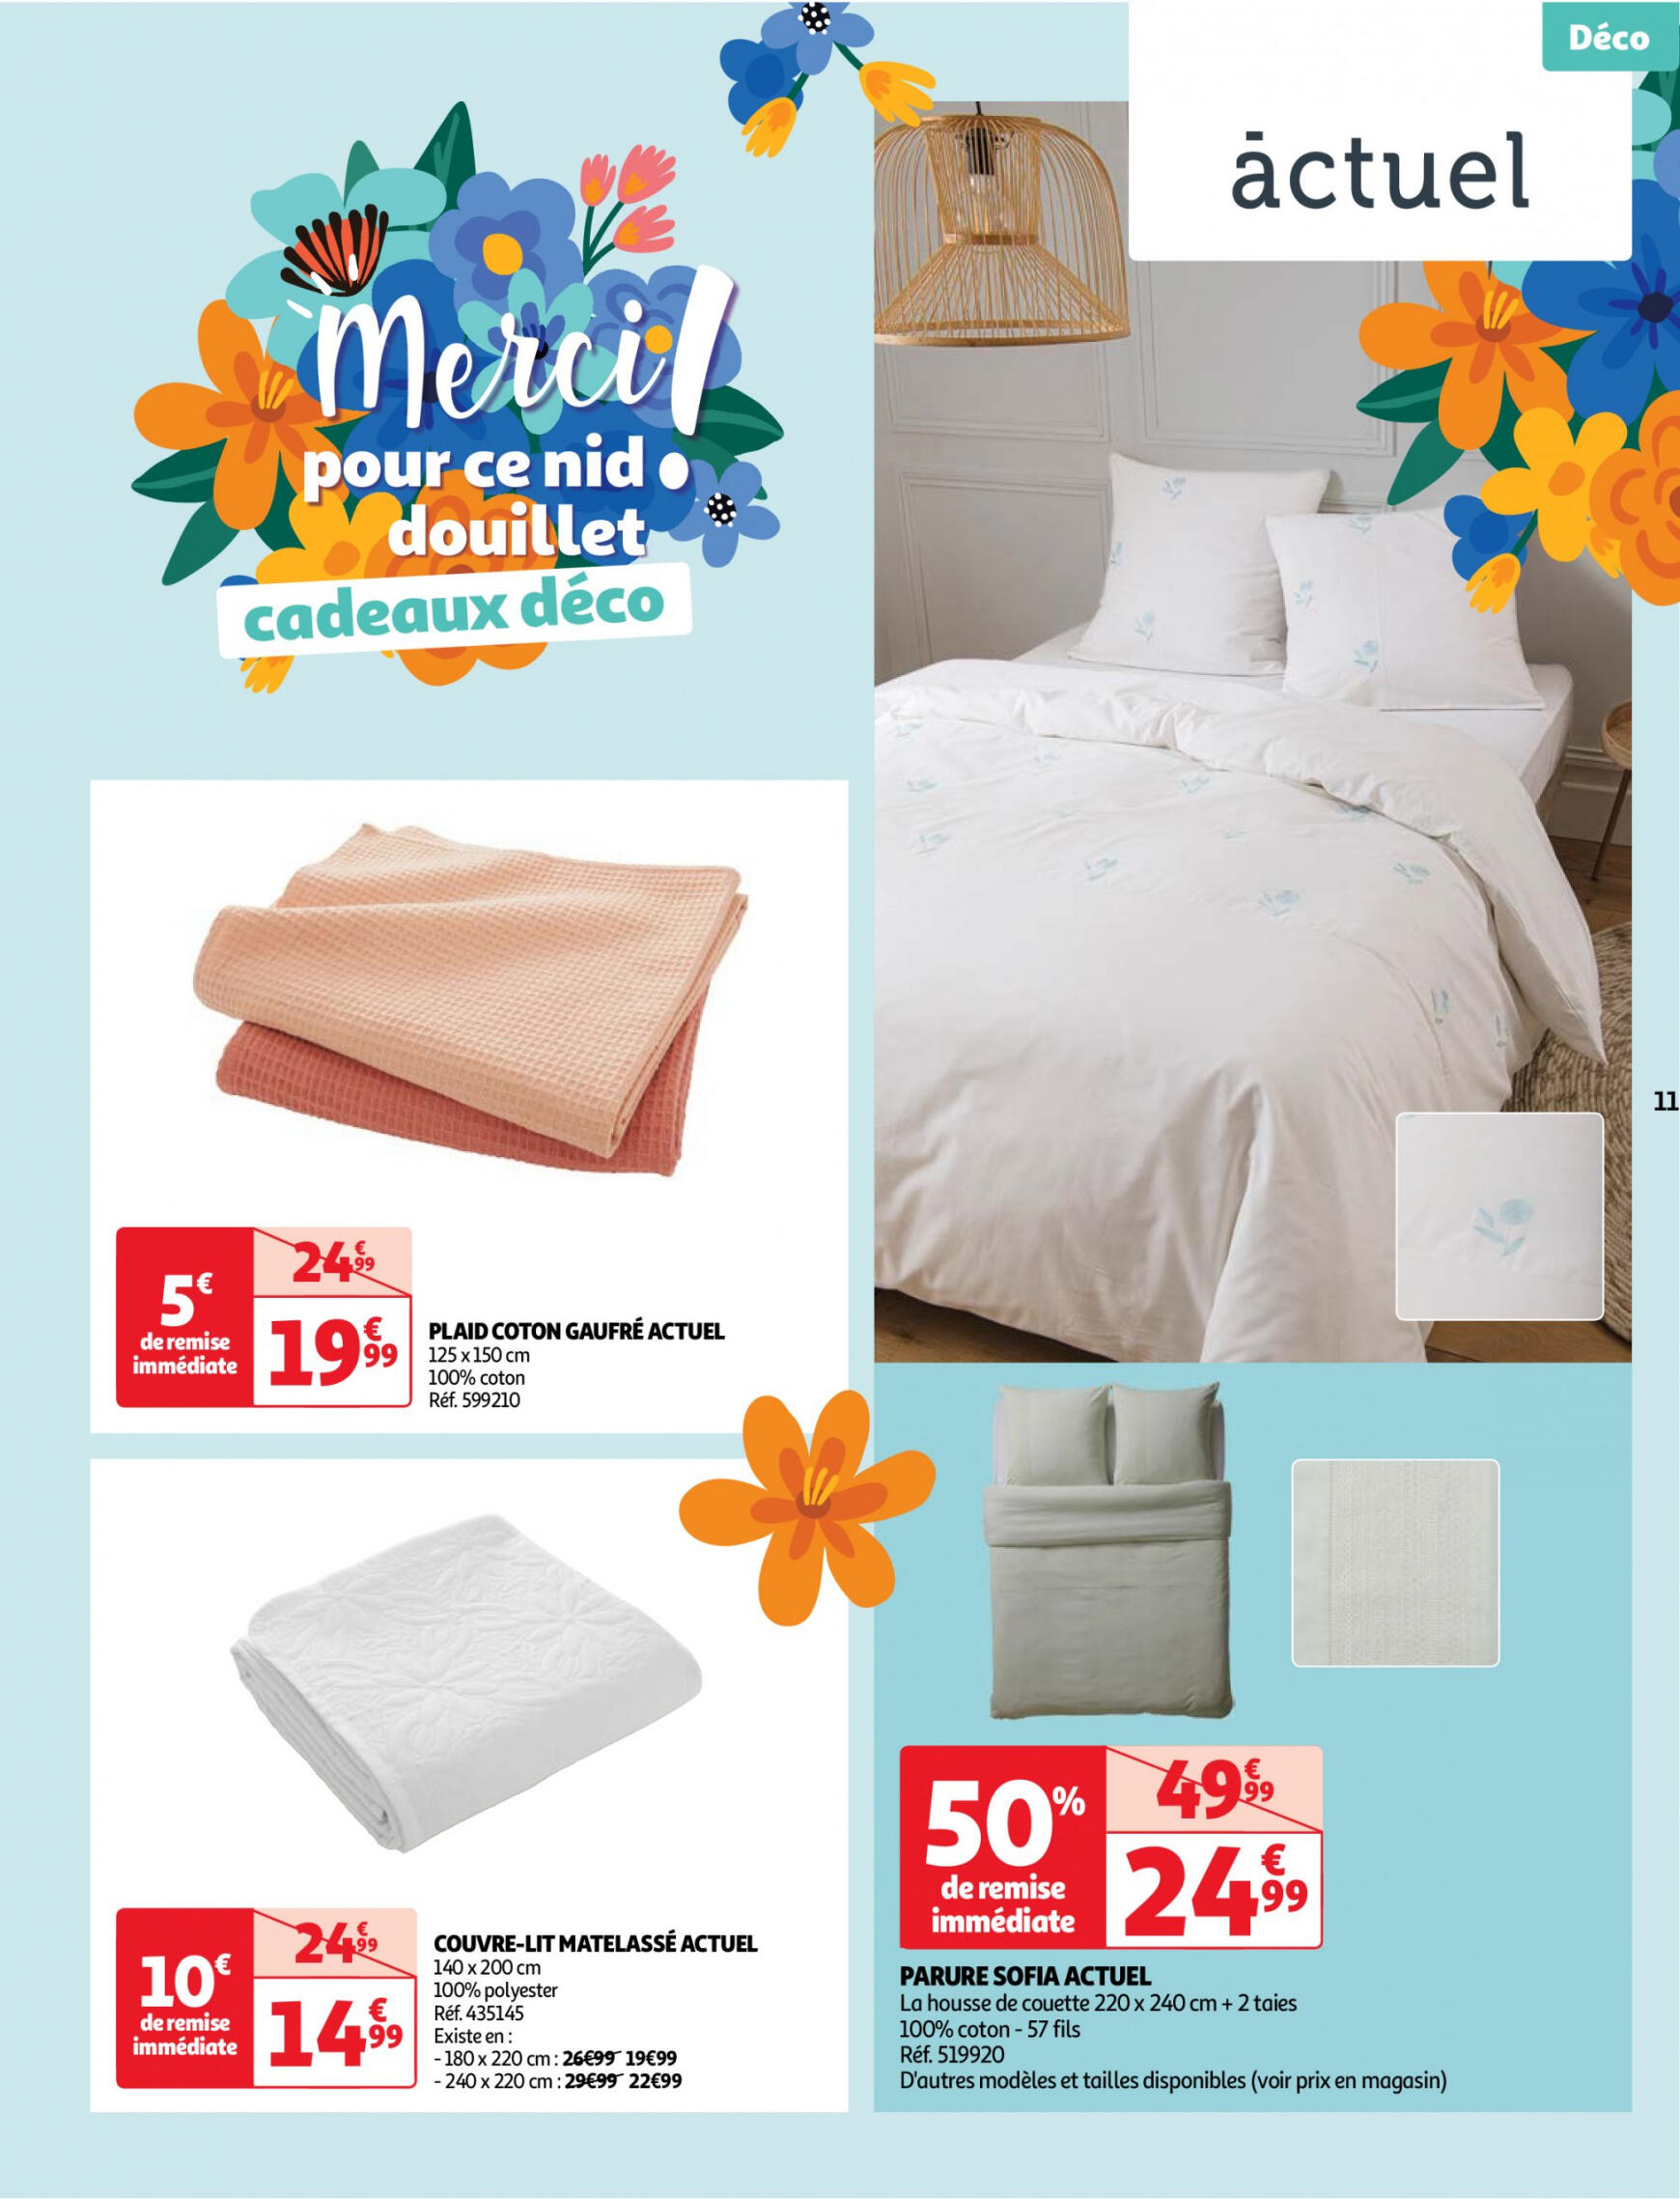 auchan - Auchan - Merci maman folder huidig 14.05. - 26.05. - page: 11